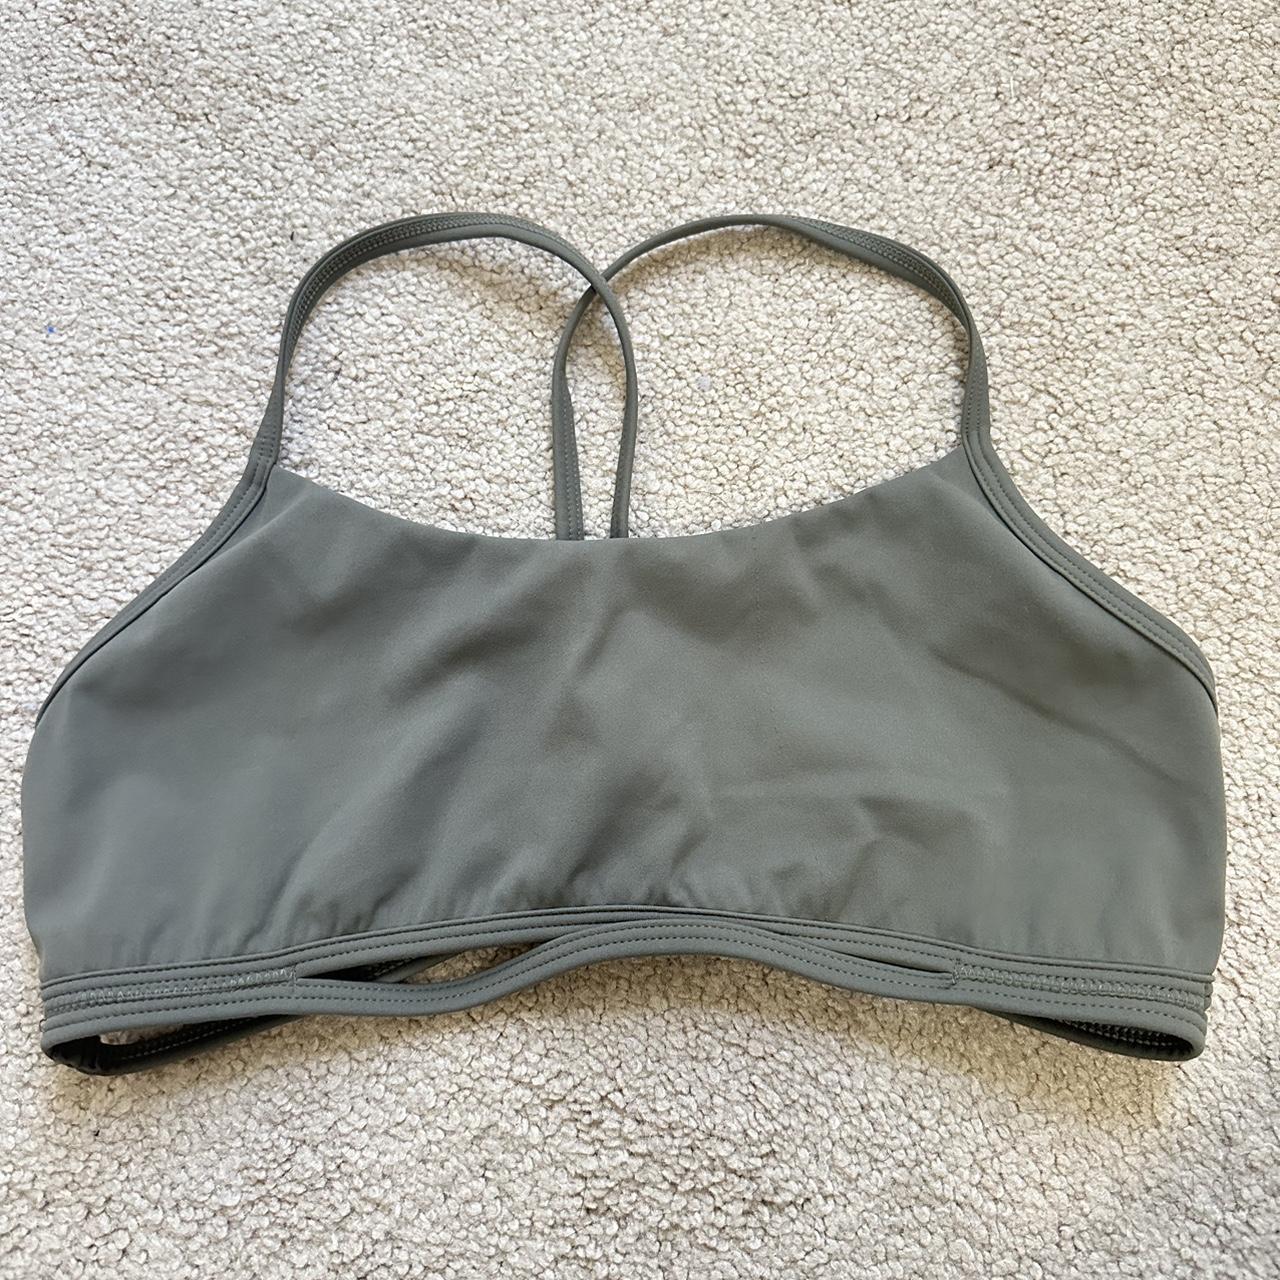 AYBL sports bra Sports bra in the color stone gray - Depop